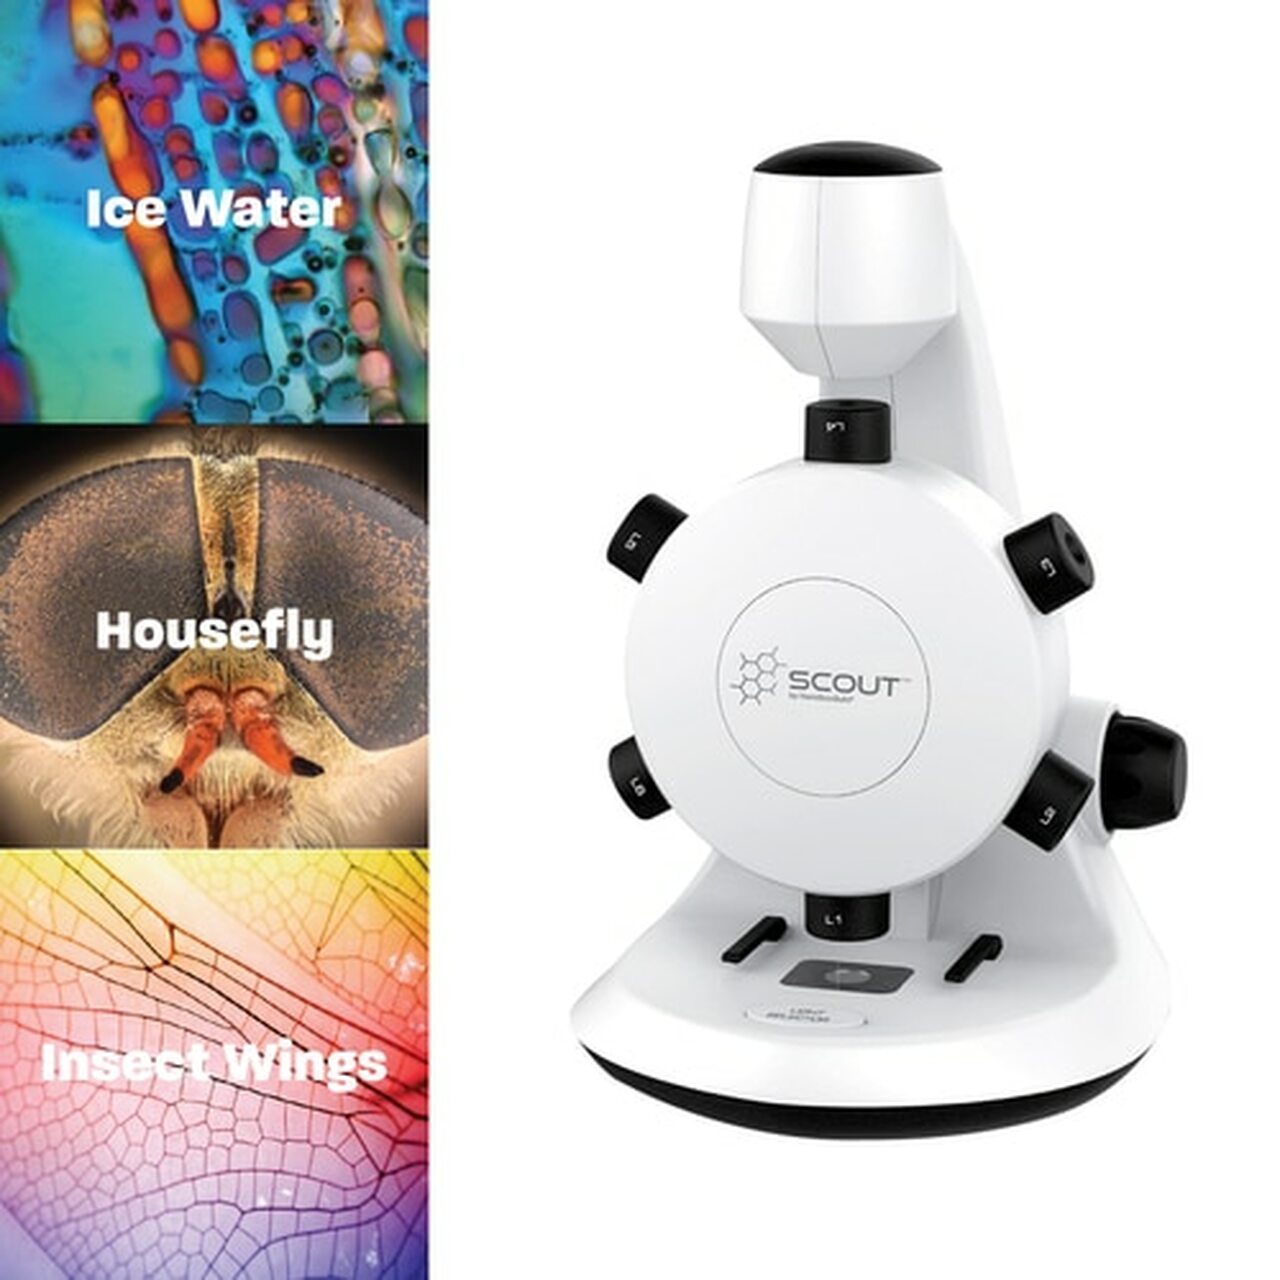 Scout™ Digital STEM Microscope with Six Magnification Lenses - ARVRedtech.com | AR & VR Education Technology